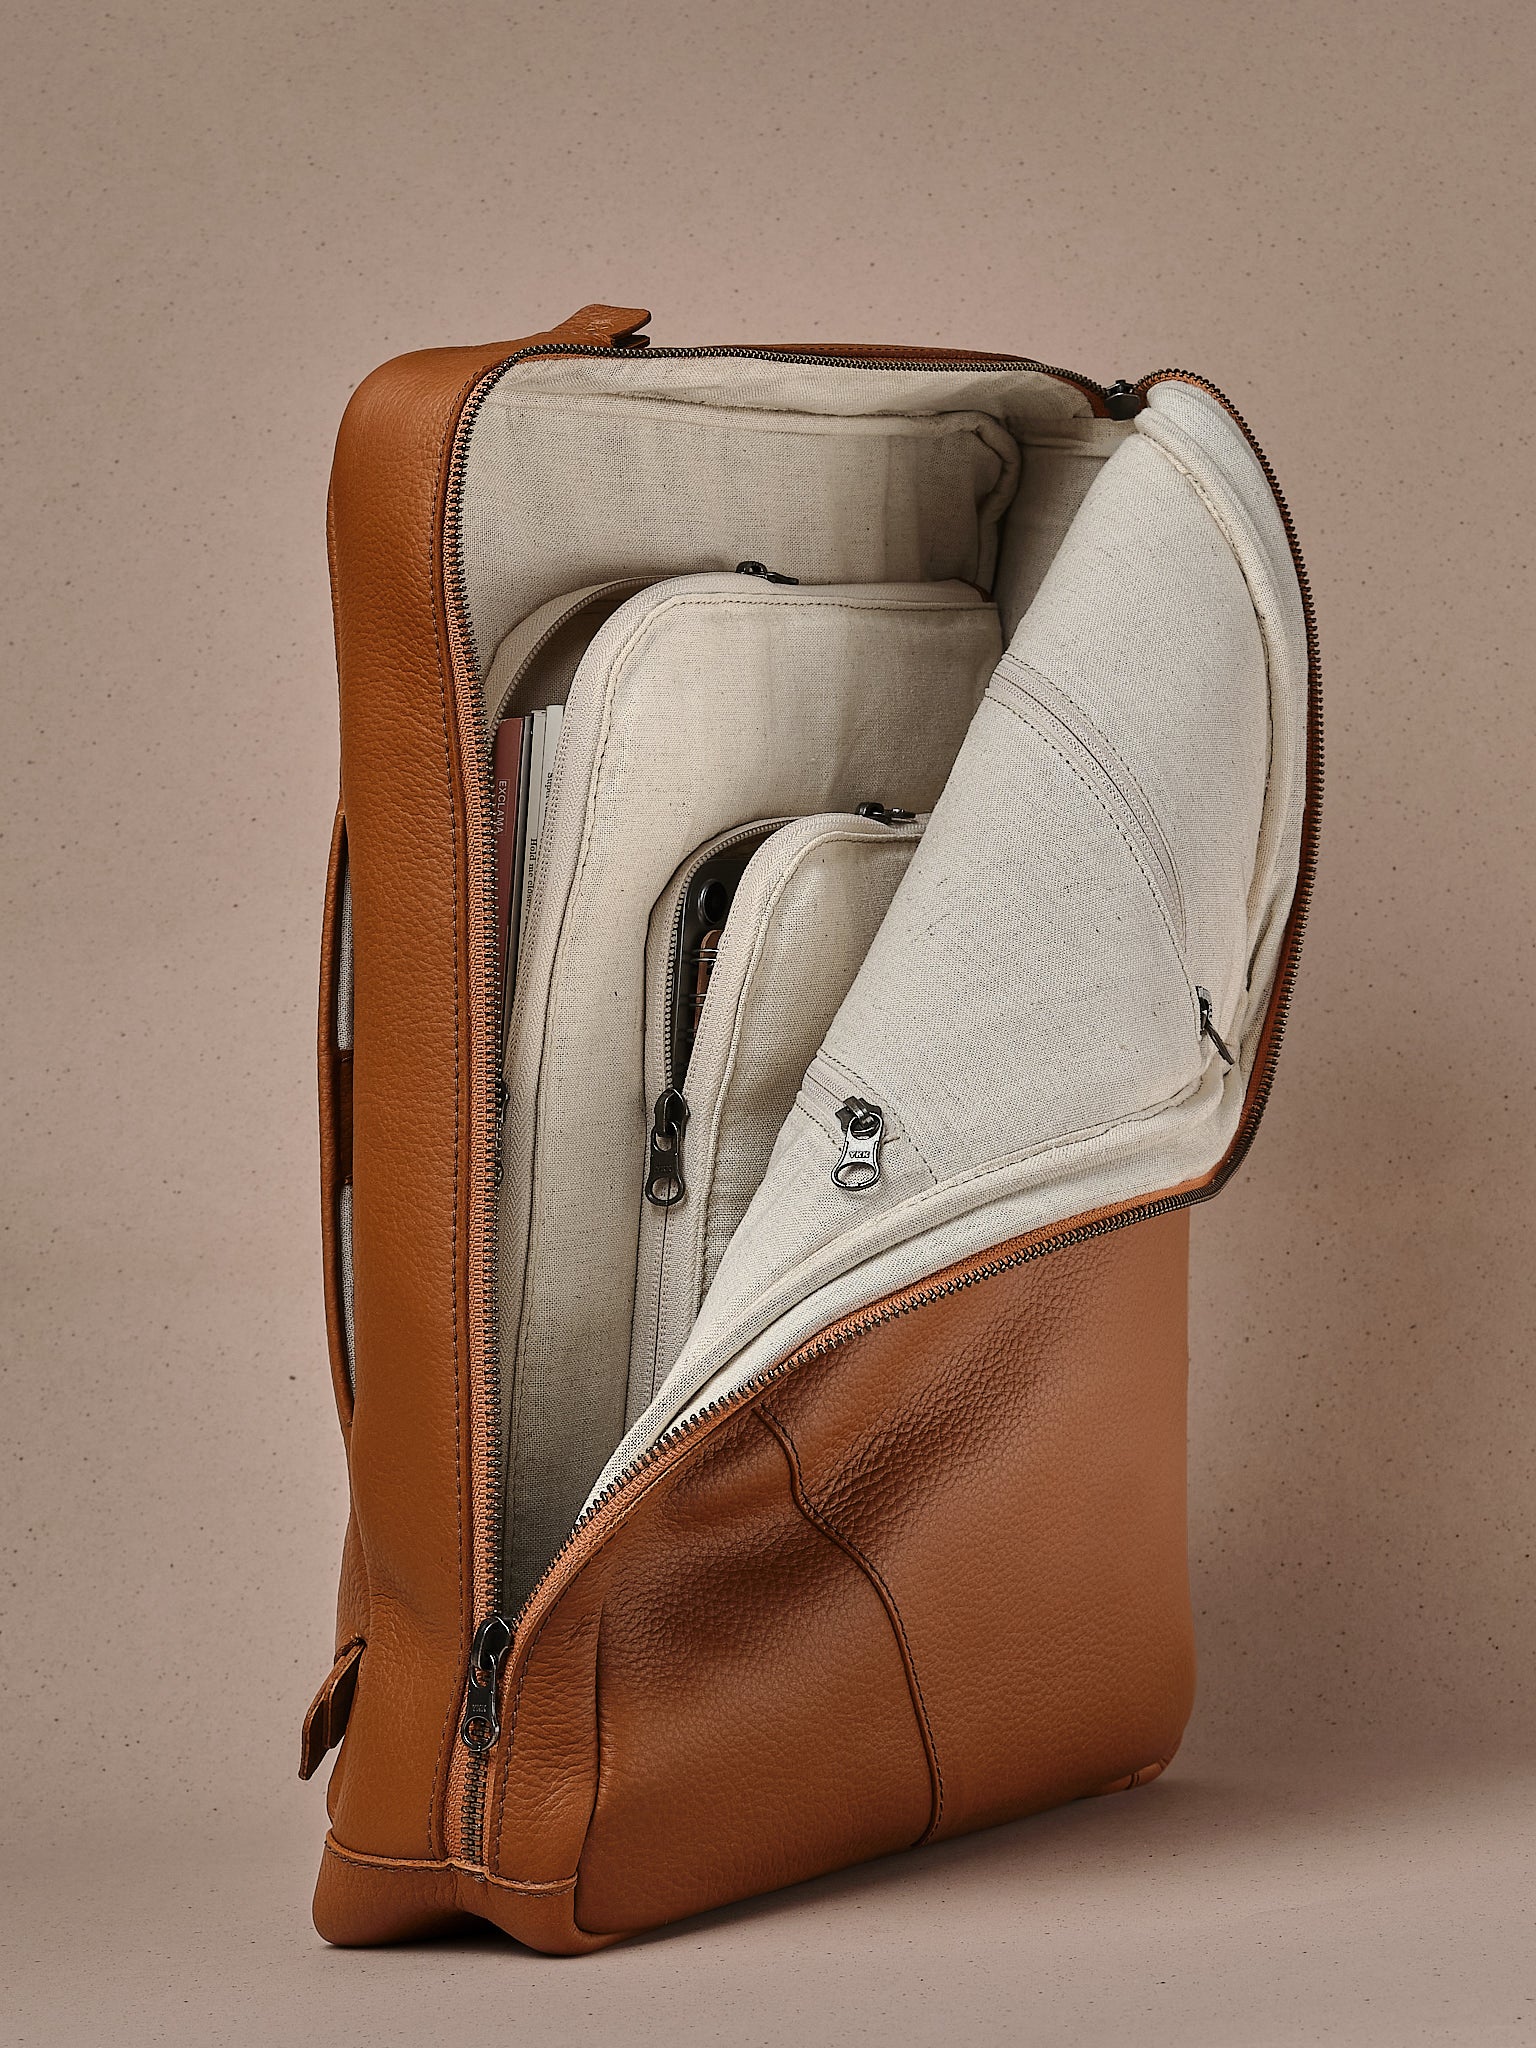 Removable shoulder strap. Laptop Briefcase Tan by Capra Leather